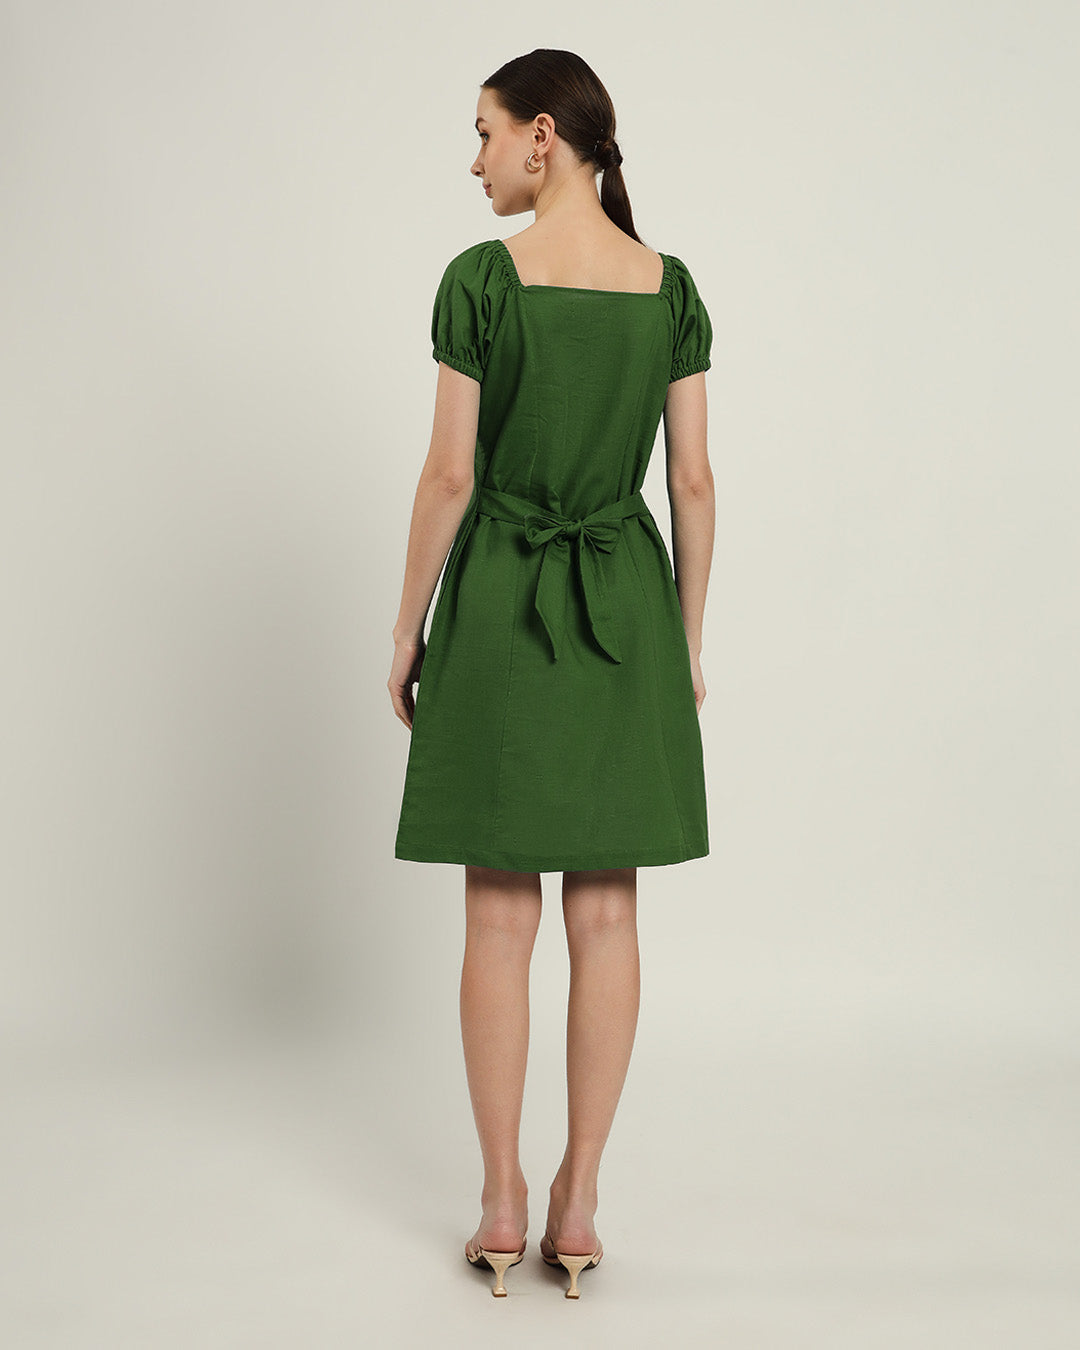 The Arar Emerald Cotton Dress